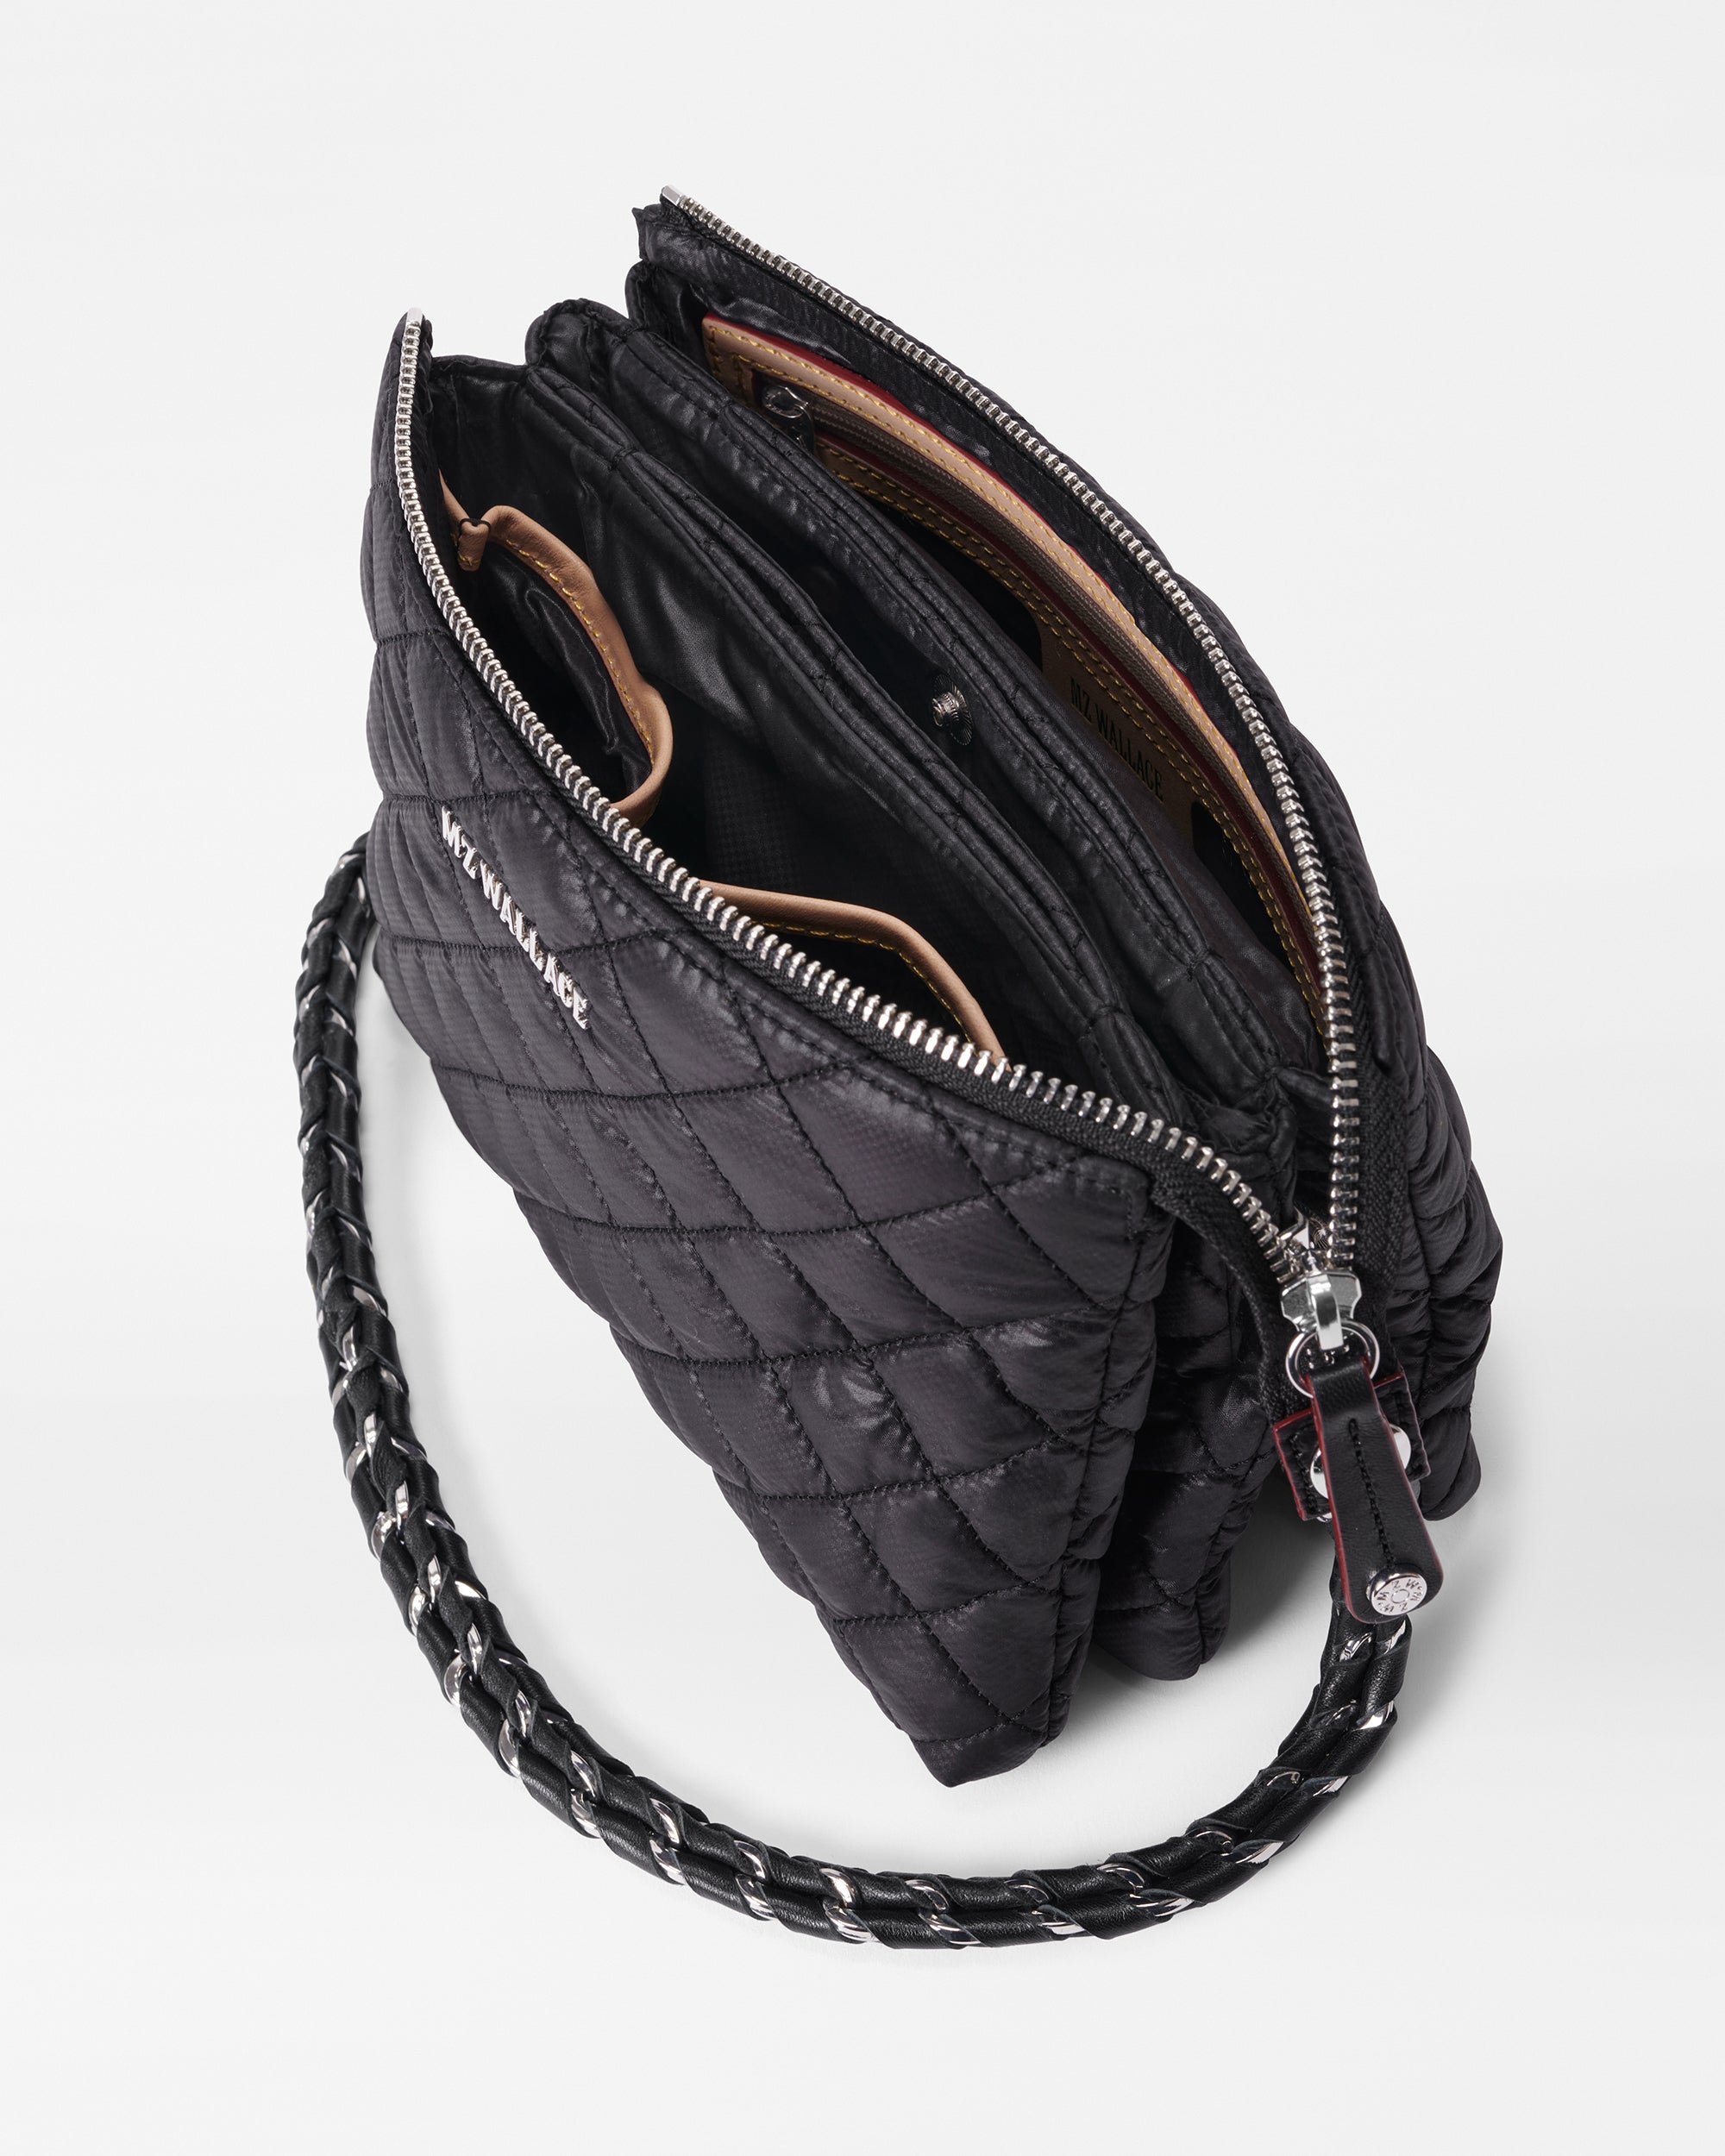 Chanel Crocs Charm – The Accessory Attic